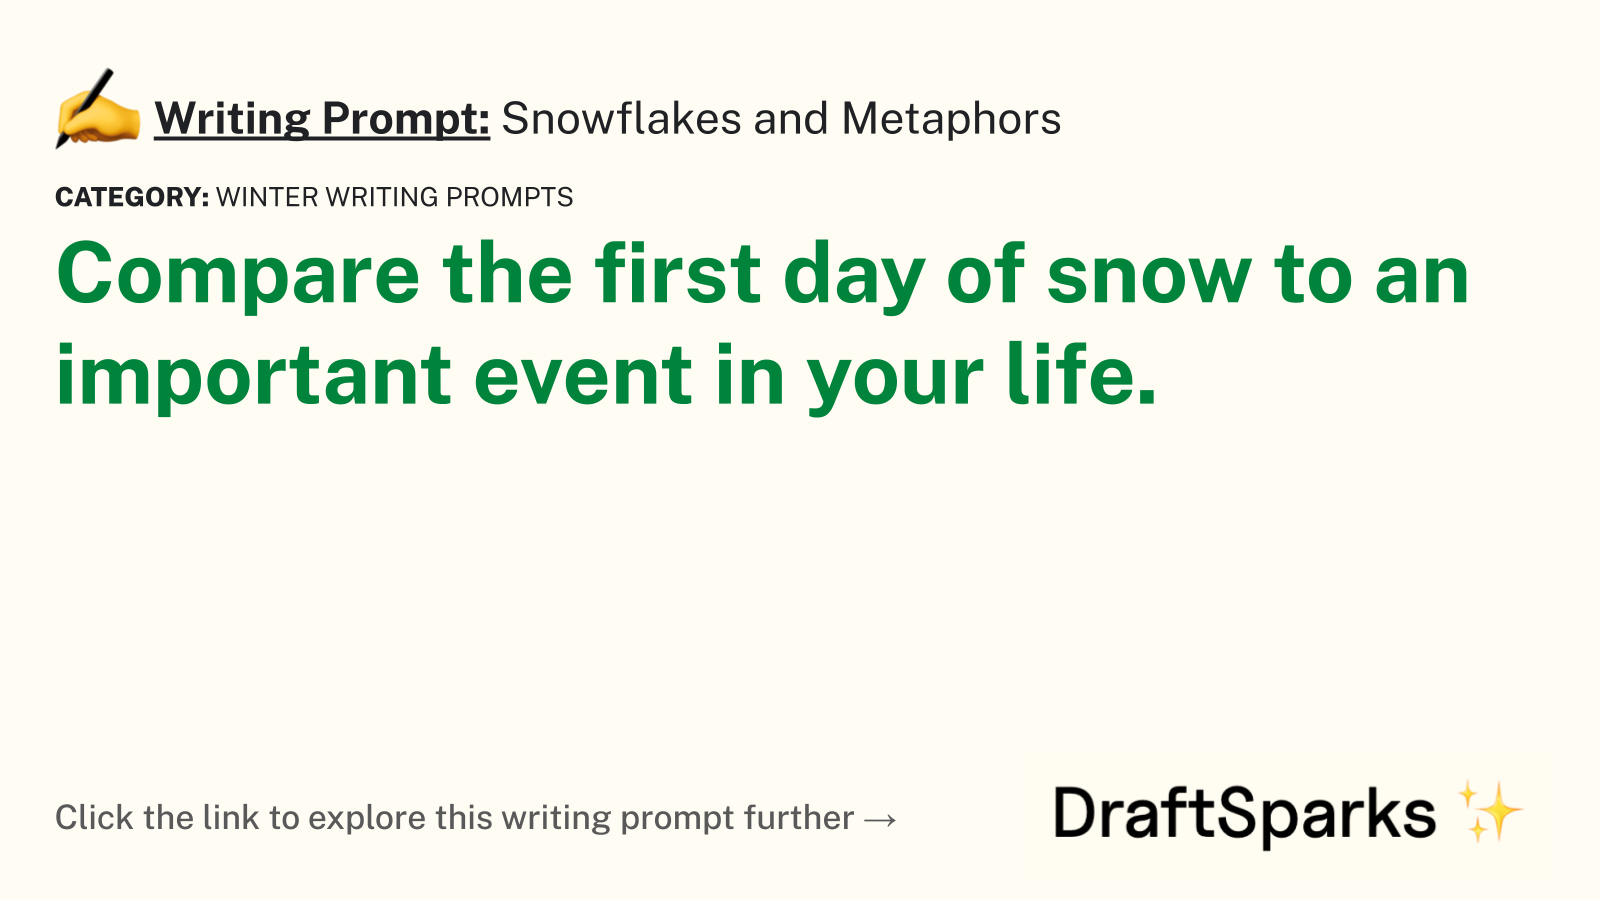 Snowflakes and Metaphors